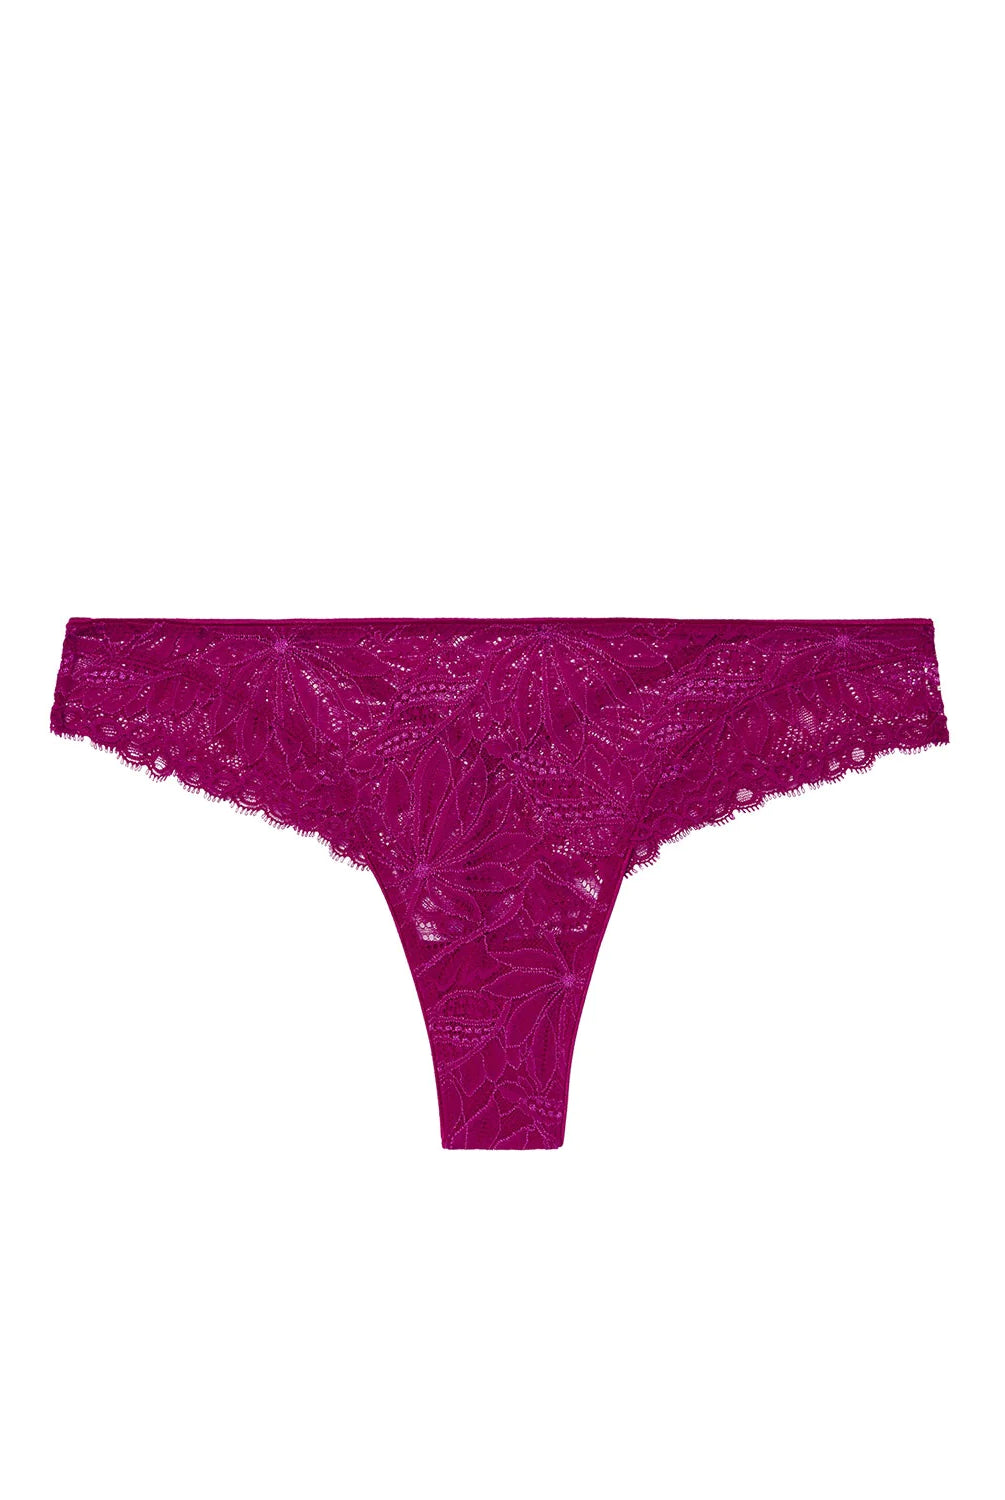 Exotica Tanga Panty - Raspberry - Flirt! Luxe Lingerie & Sleepwear